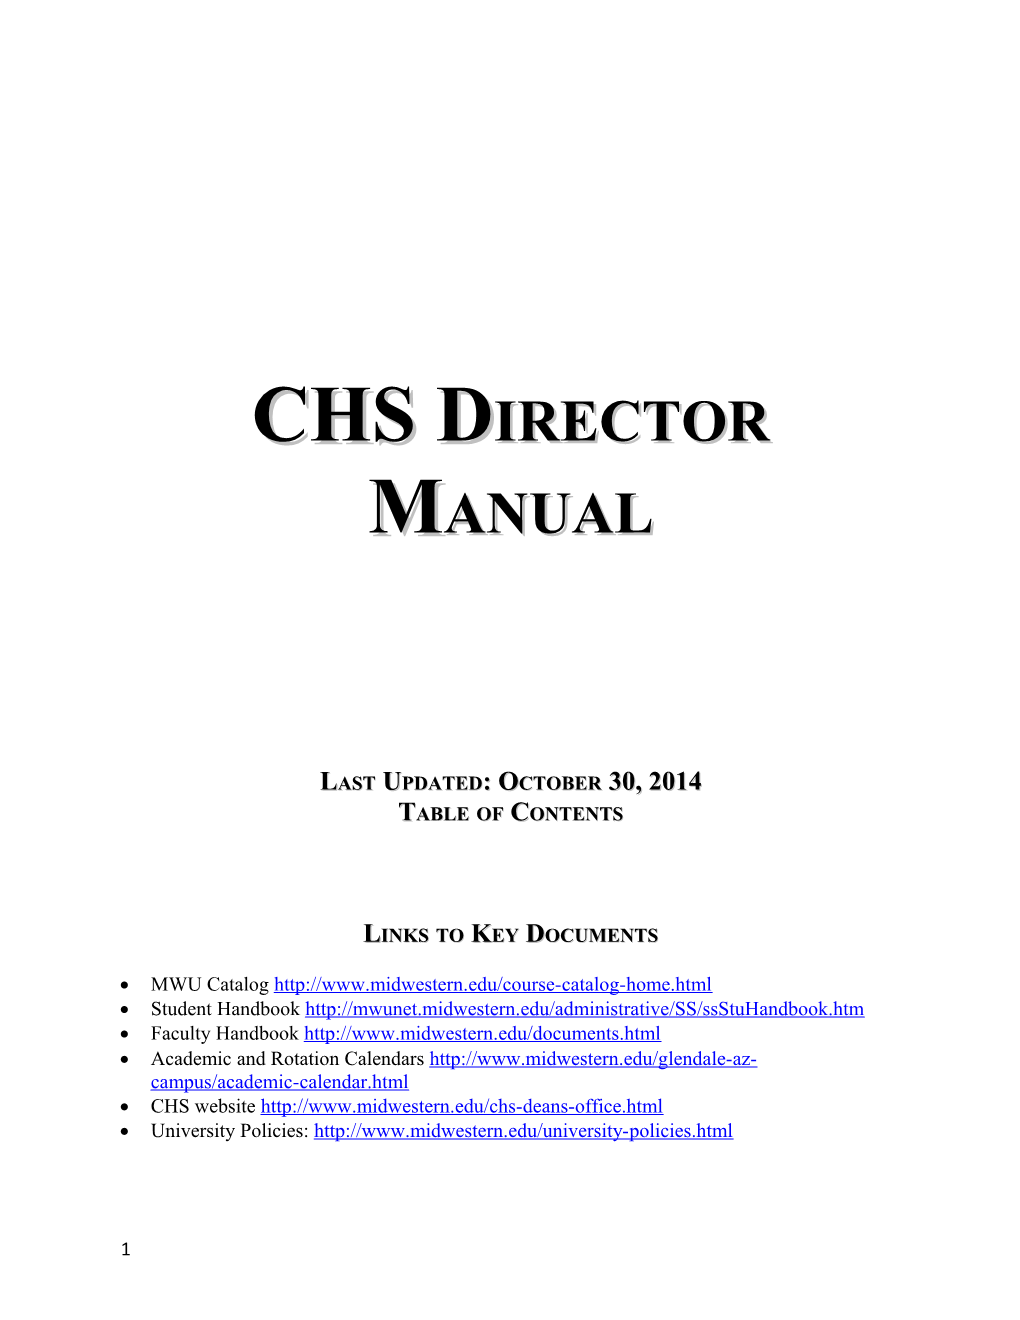 CHS Director Manual